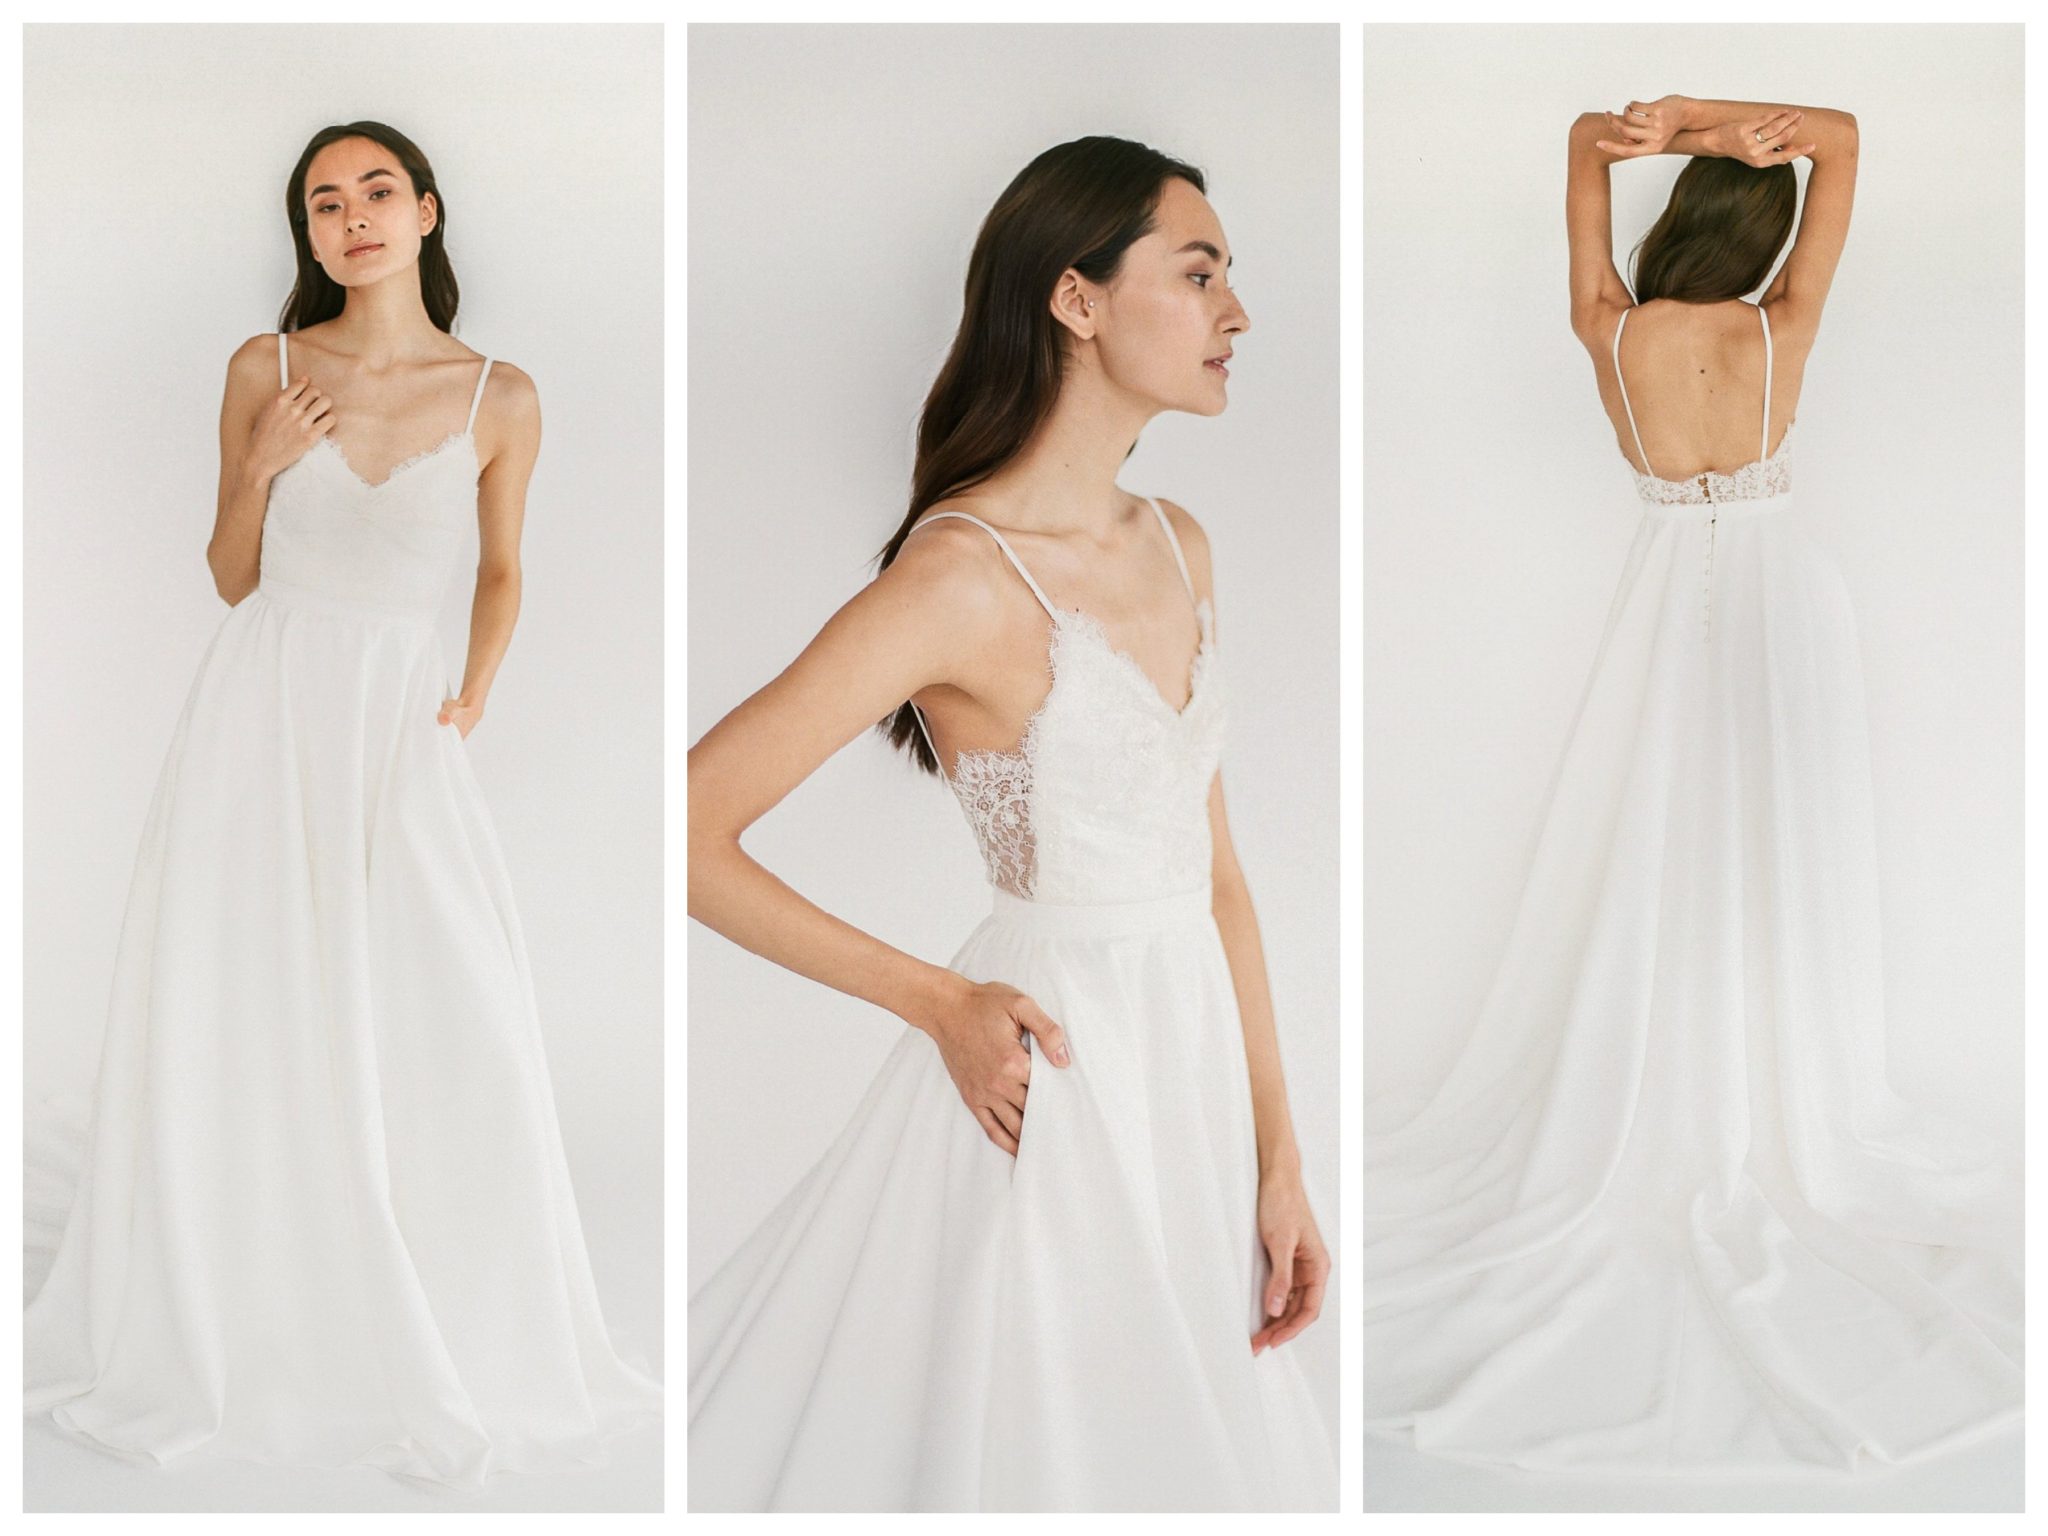 Wedding dresses for broad shoulders by top Los Angeles bridal shop, Love and Lace Bridal Salon: Truvelle Bridal's Trisha